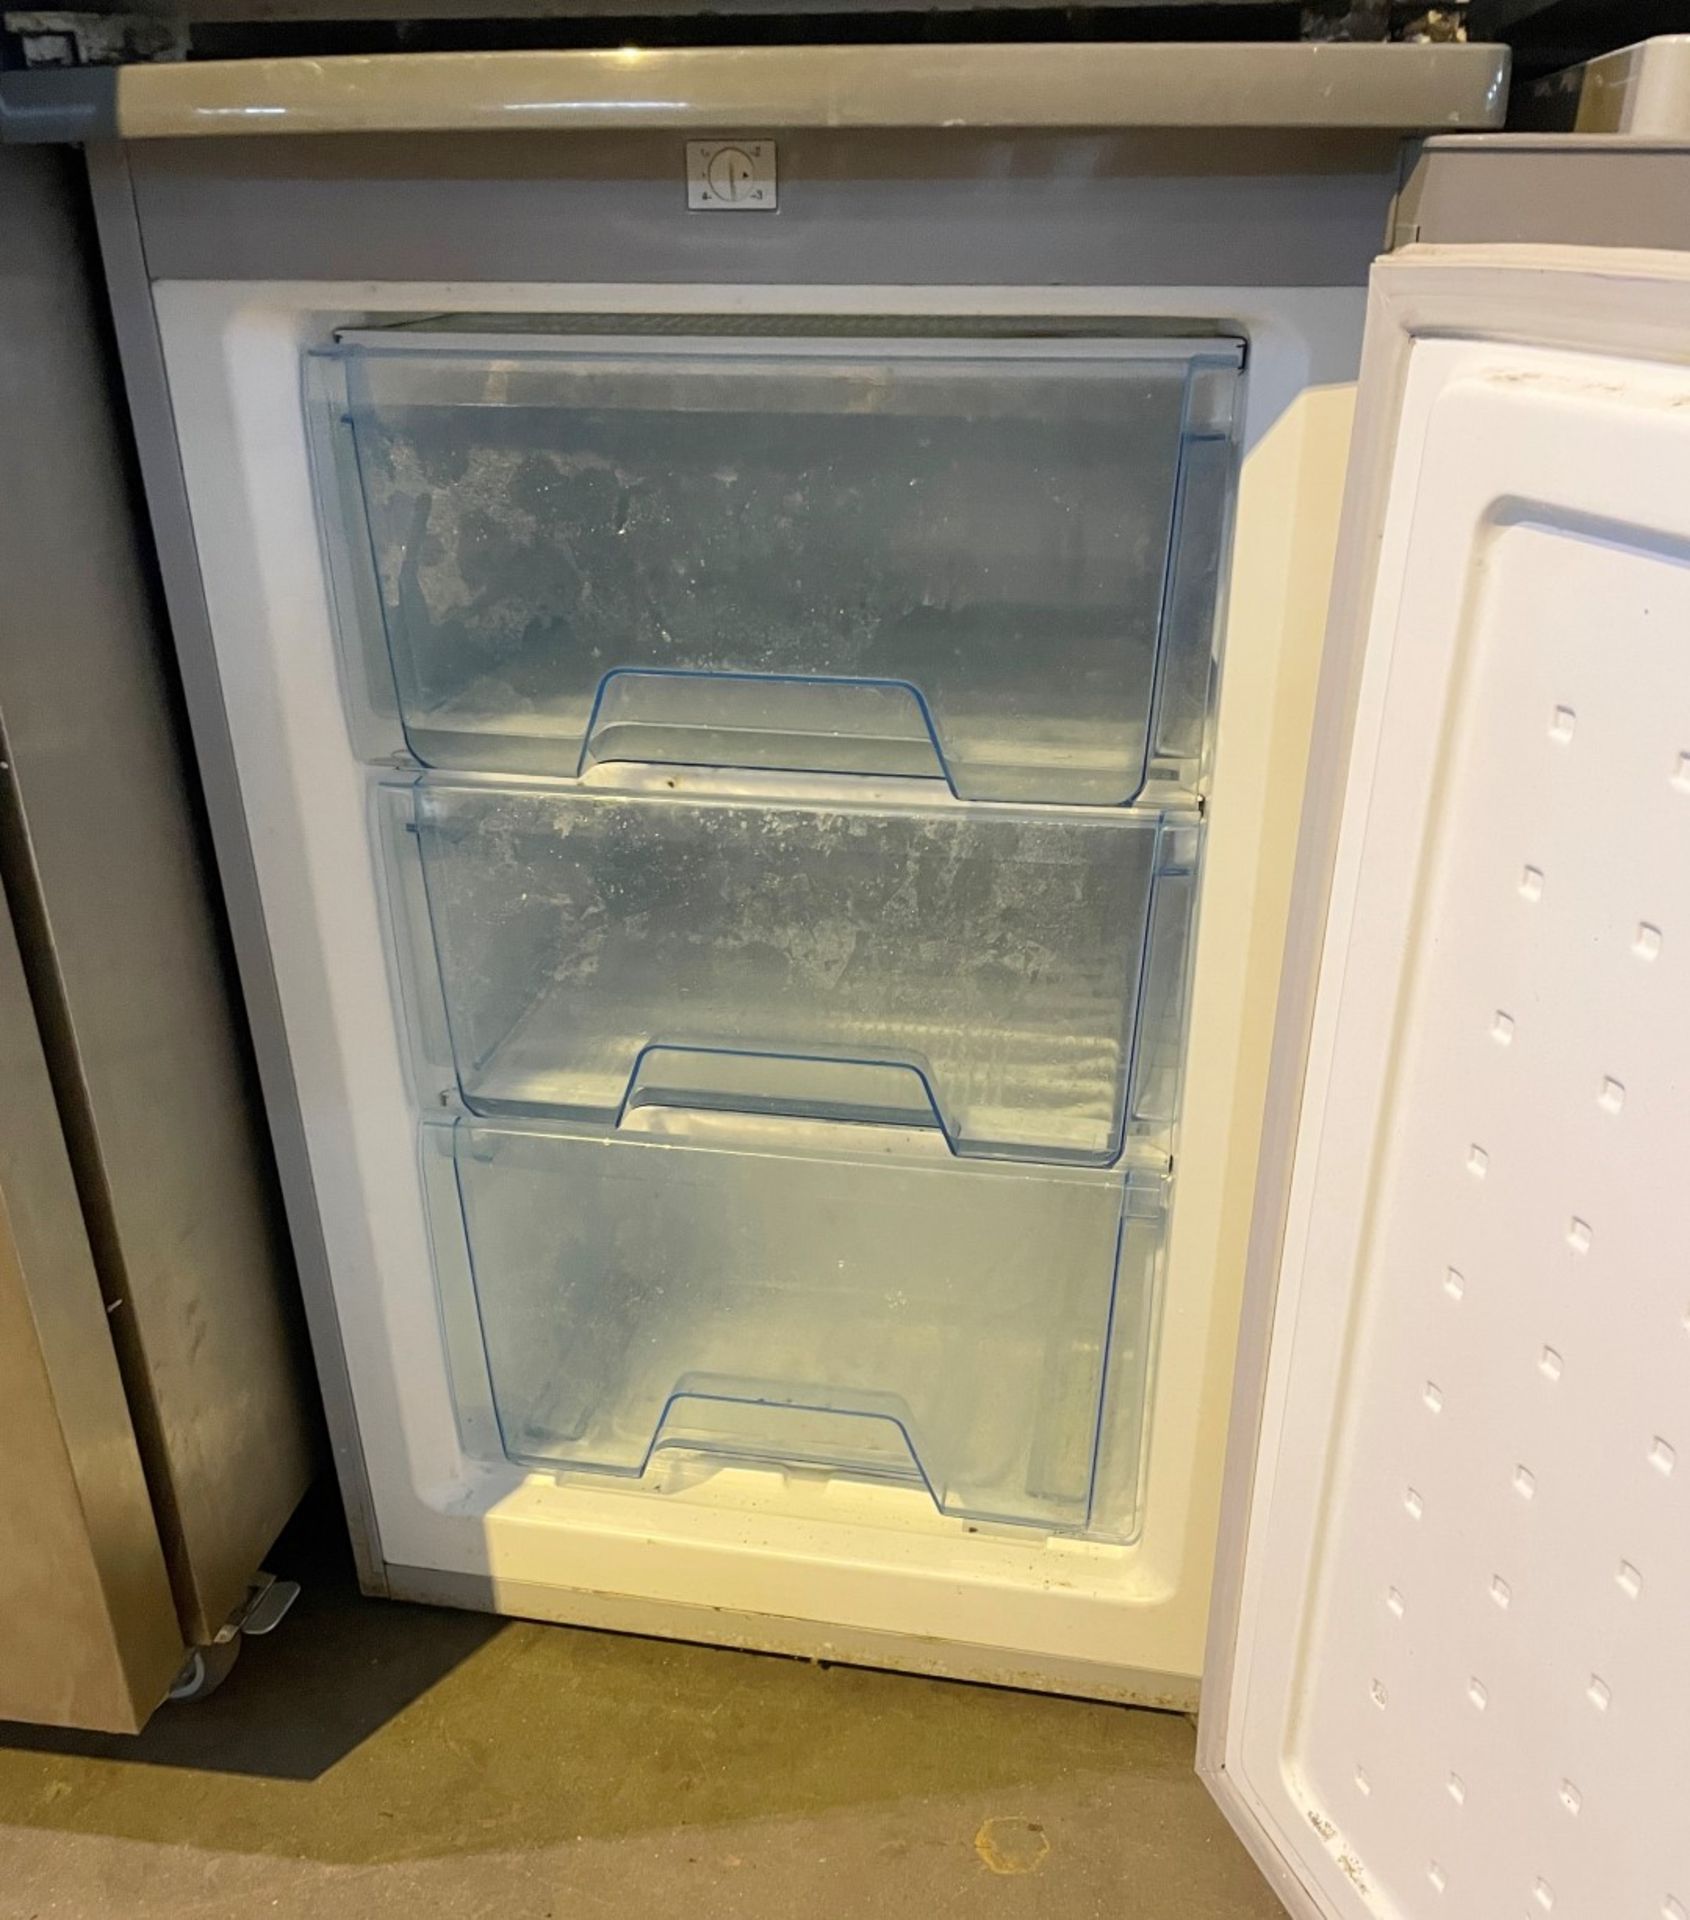 1 x Logik Undercounter Three Drawer Storage Freezer With Silver Finish - Image 2 of 4